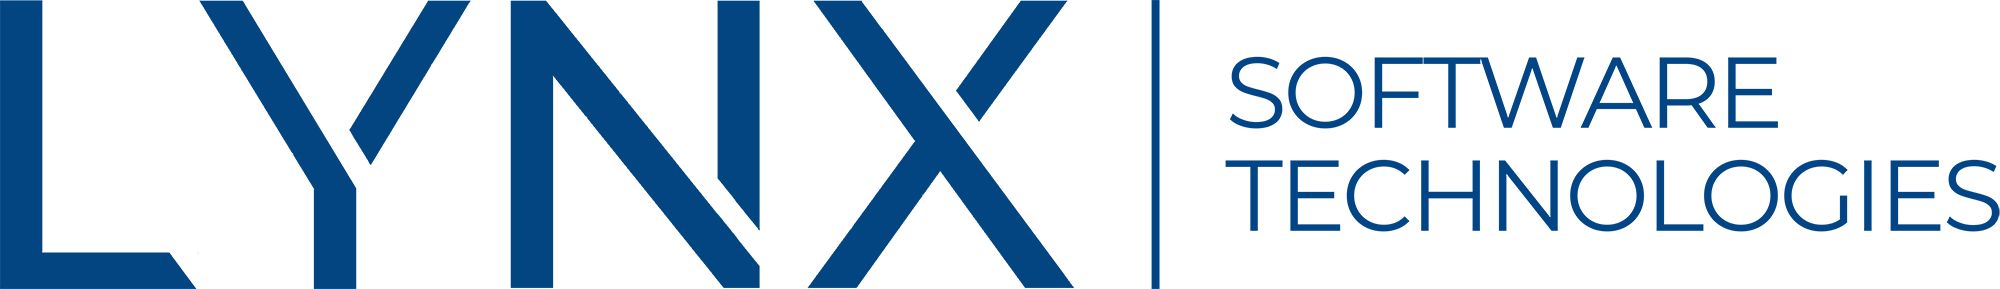 Web 3.0 LYNX Software Technologies Logo Blue -medium